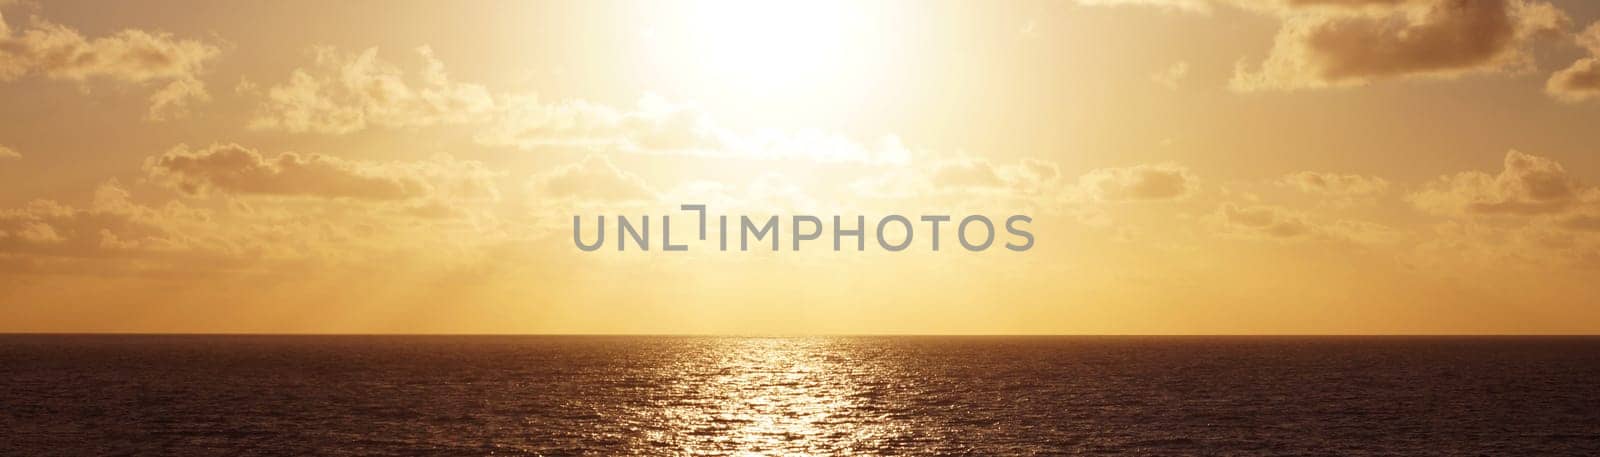 sea horizon with reflecting sun, sea panorama in brown tone by Annado